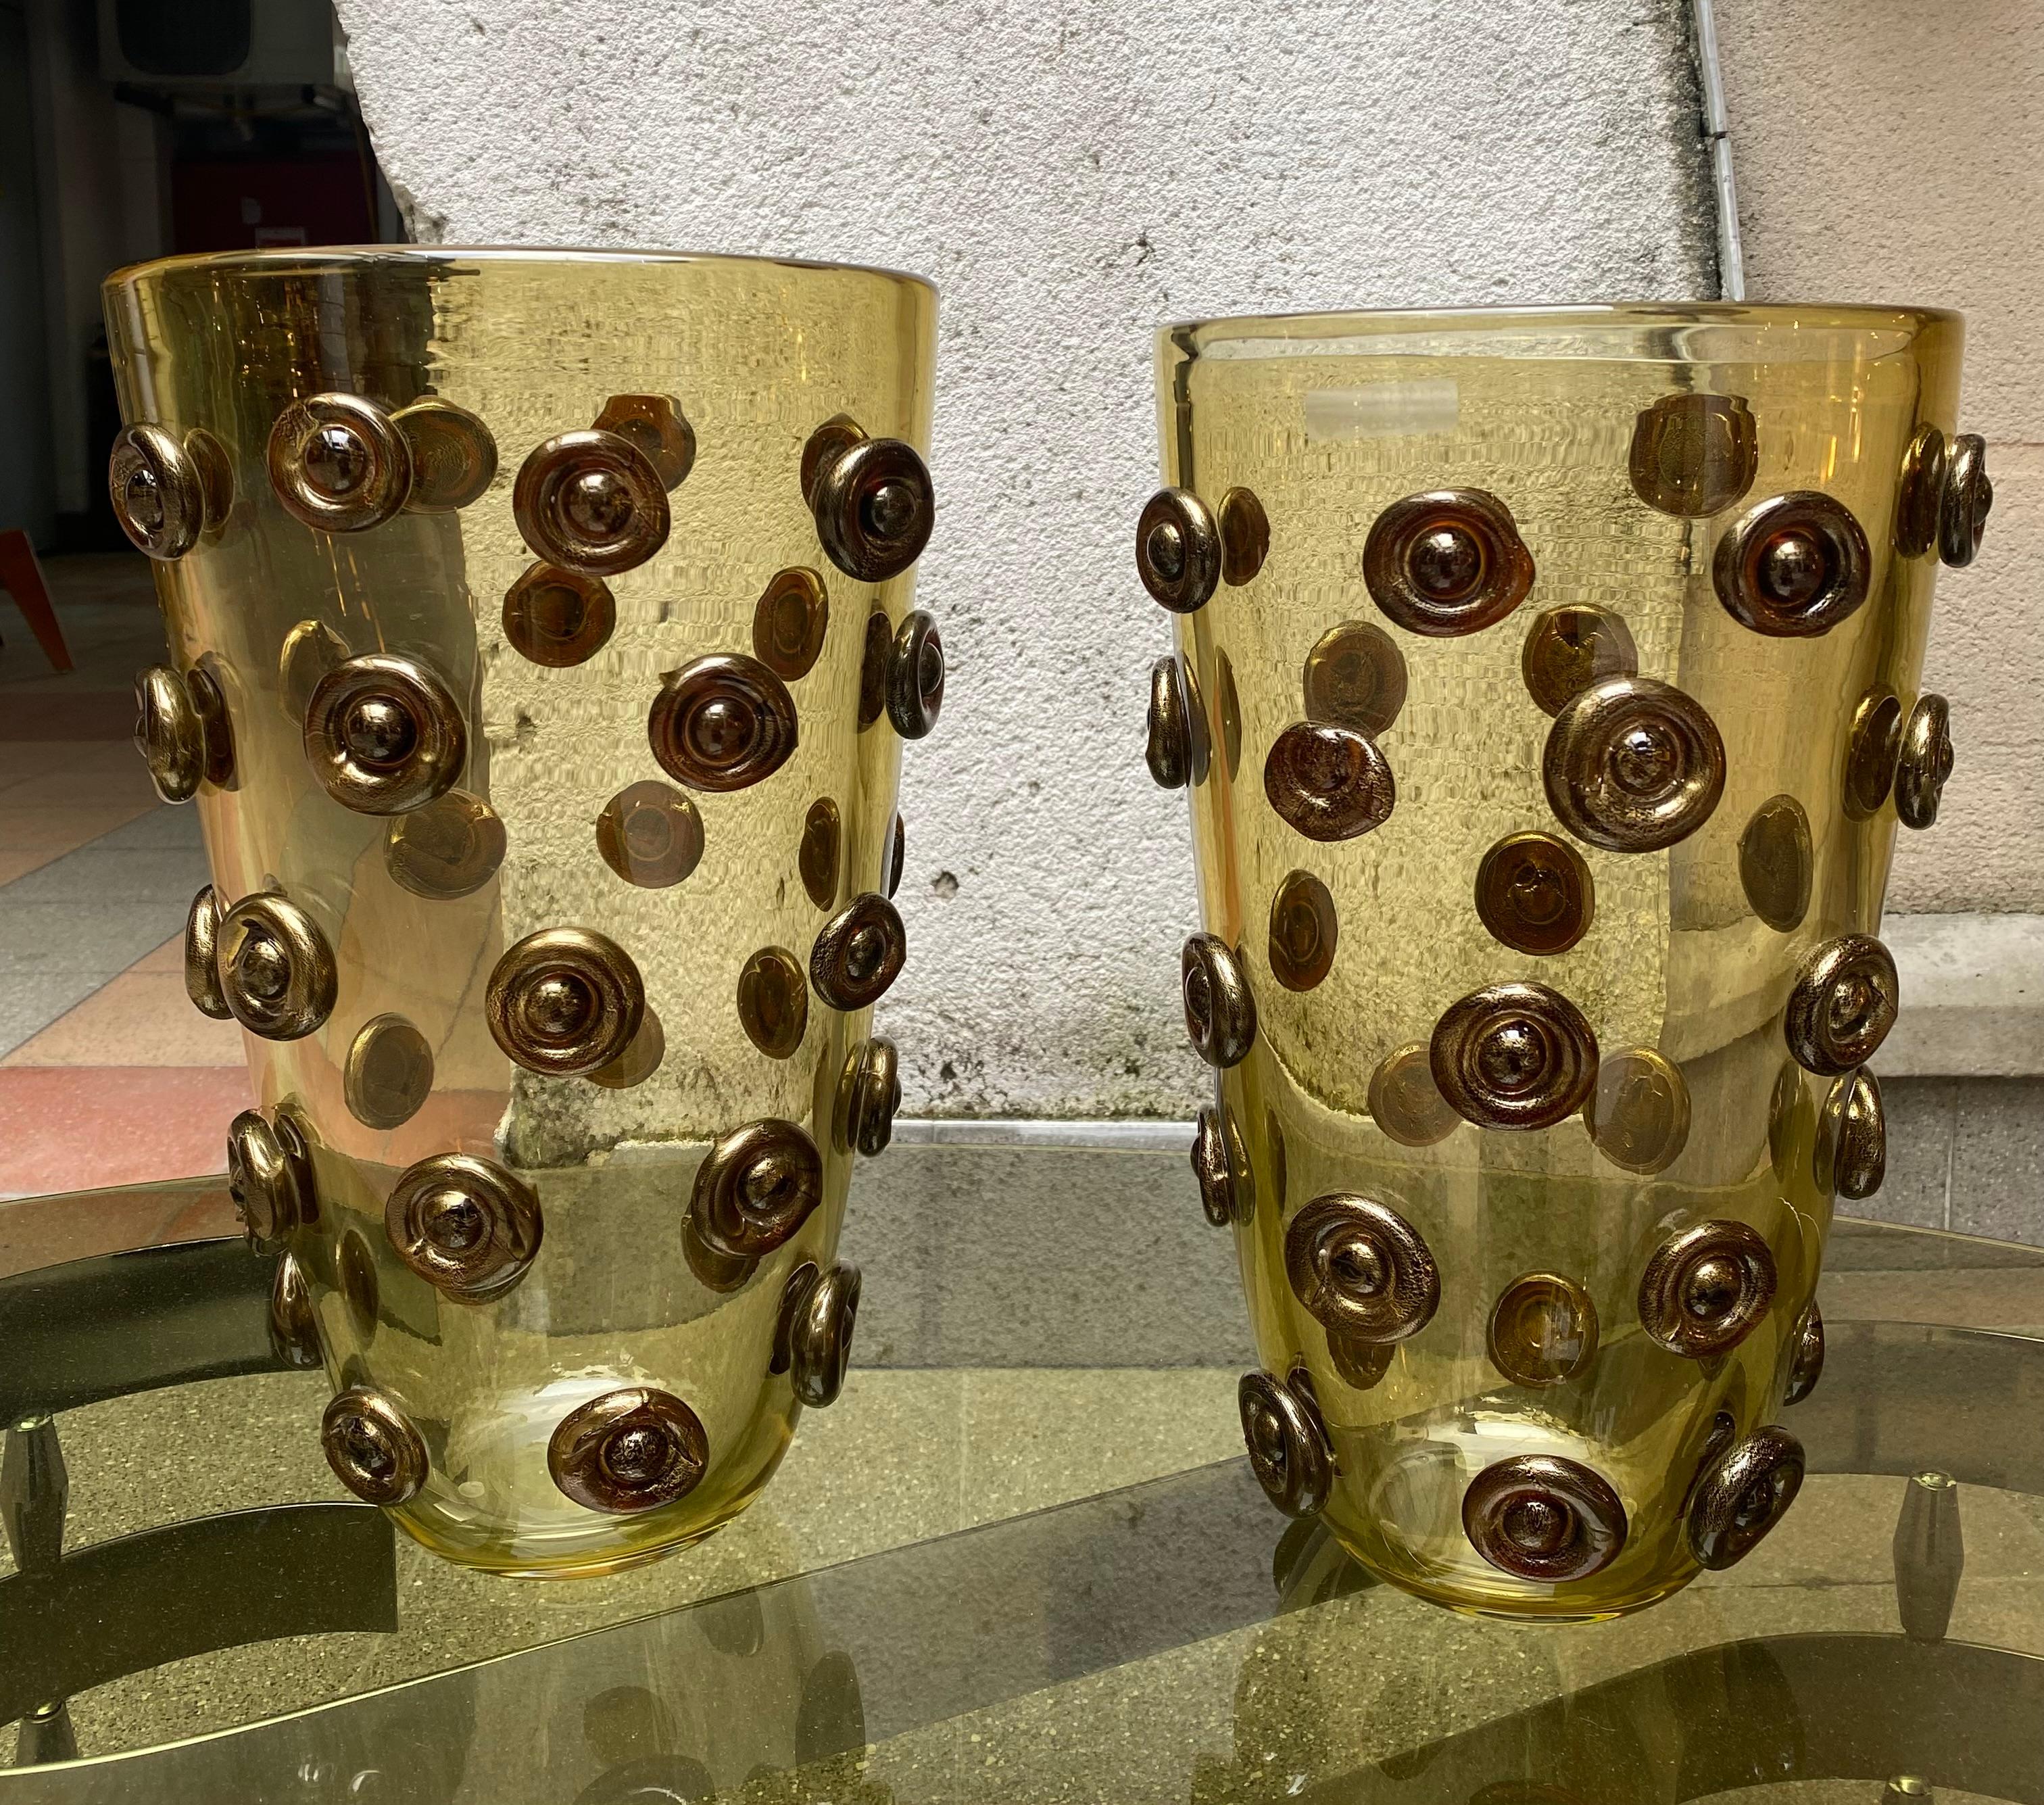 Pair of Alberto Dona Murano vases
Yellow Murano glass 
Dimensions : h38xl23xp17cm

Price : 3200€ for the pair.